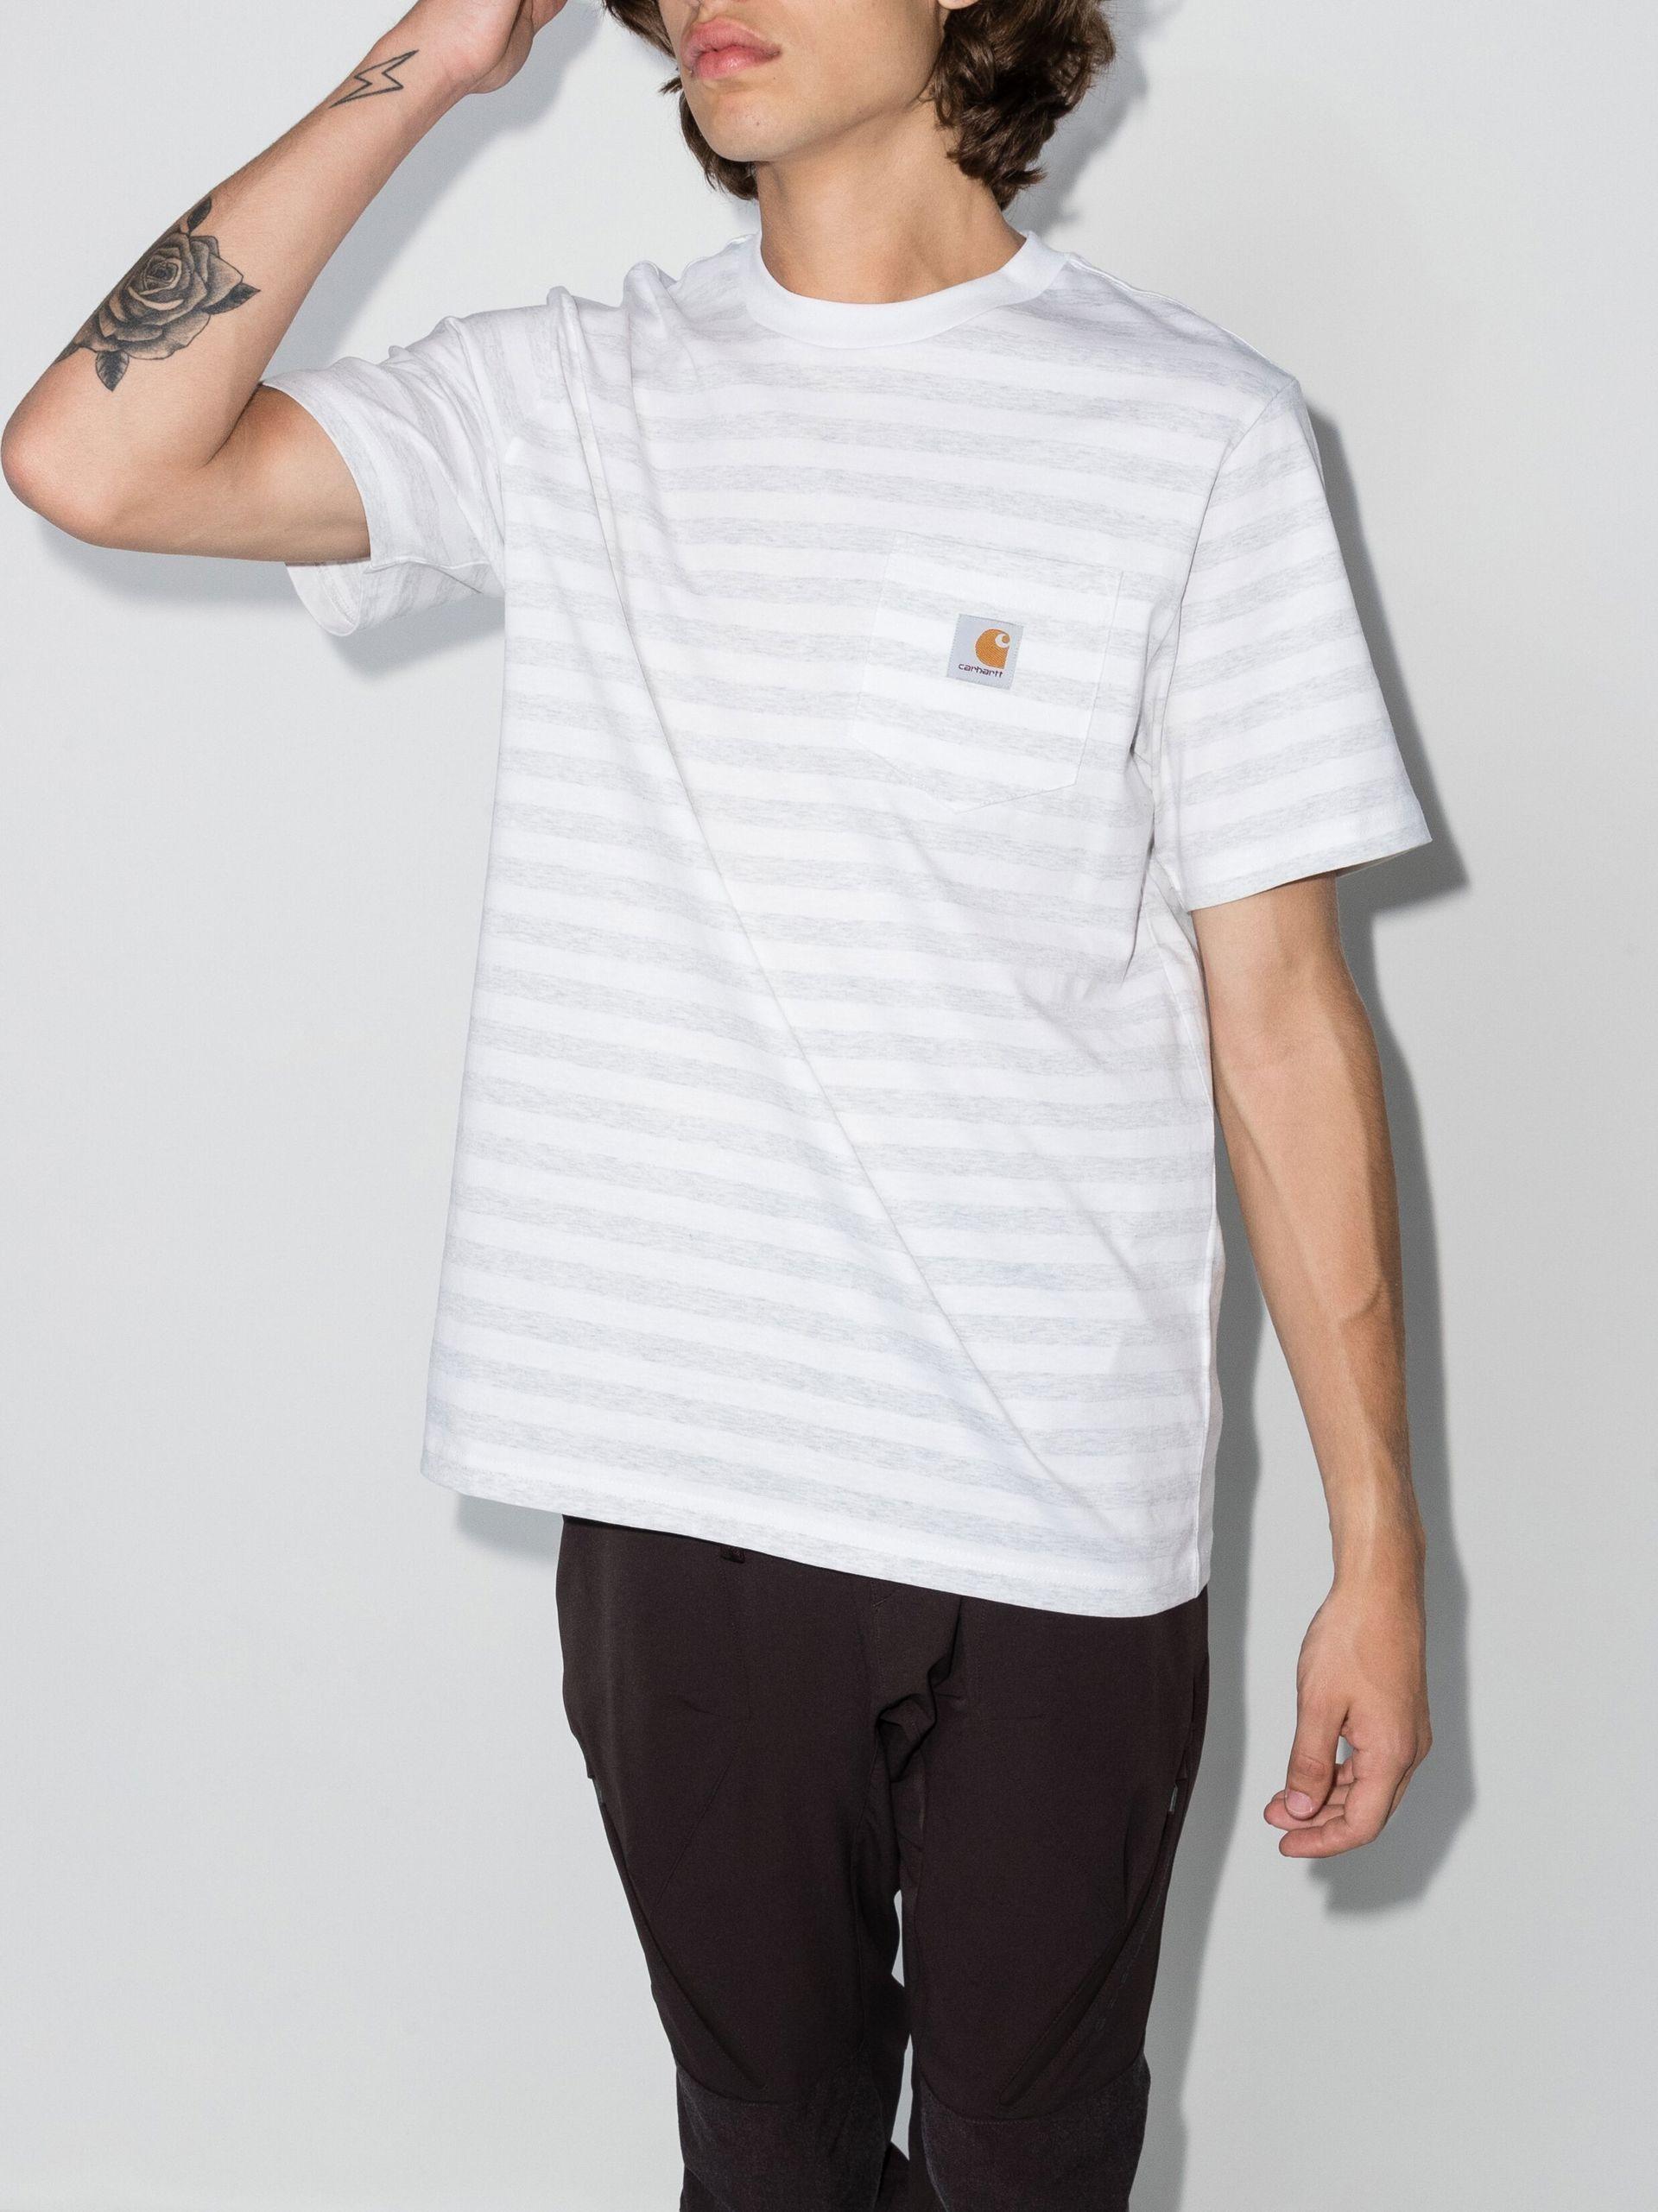 Carhartt WIP S/s Scotty Pocket T-shirt in White for Men | Lyst